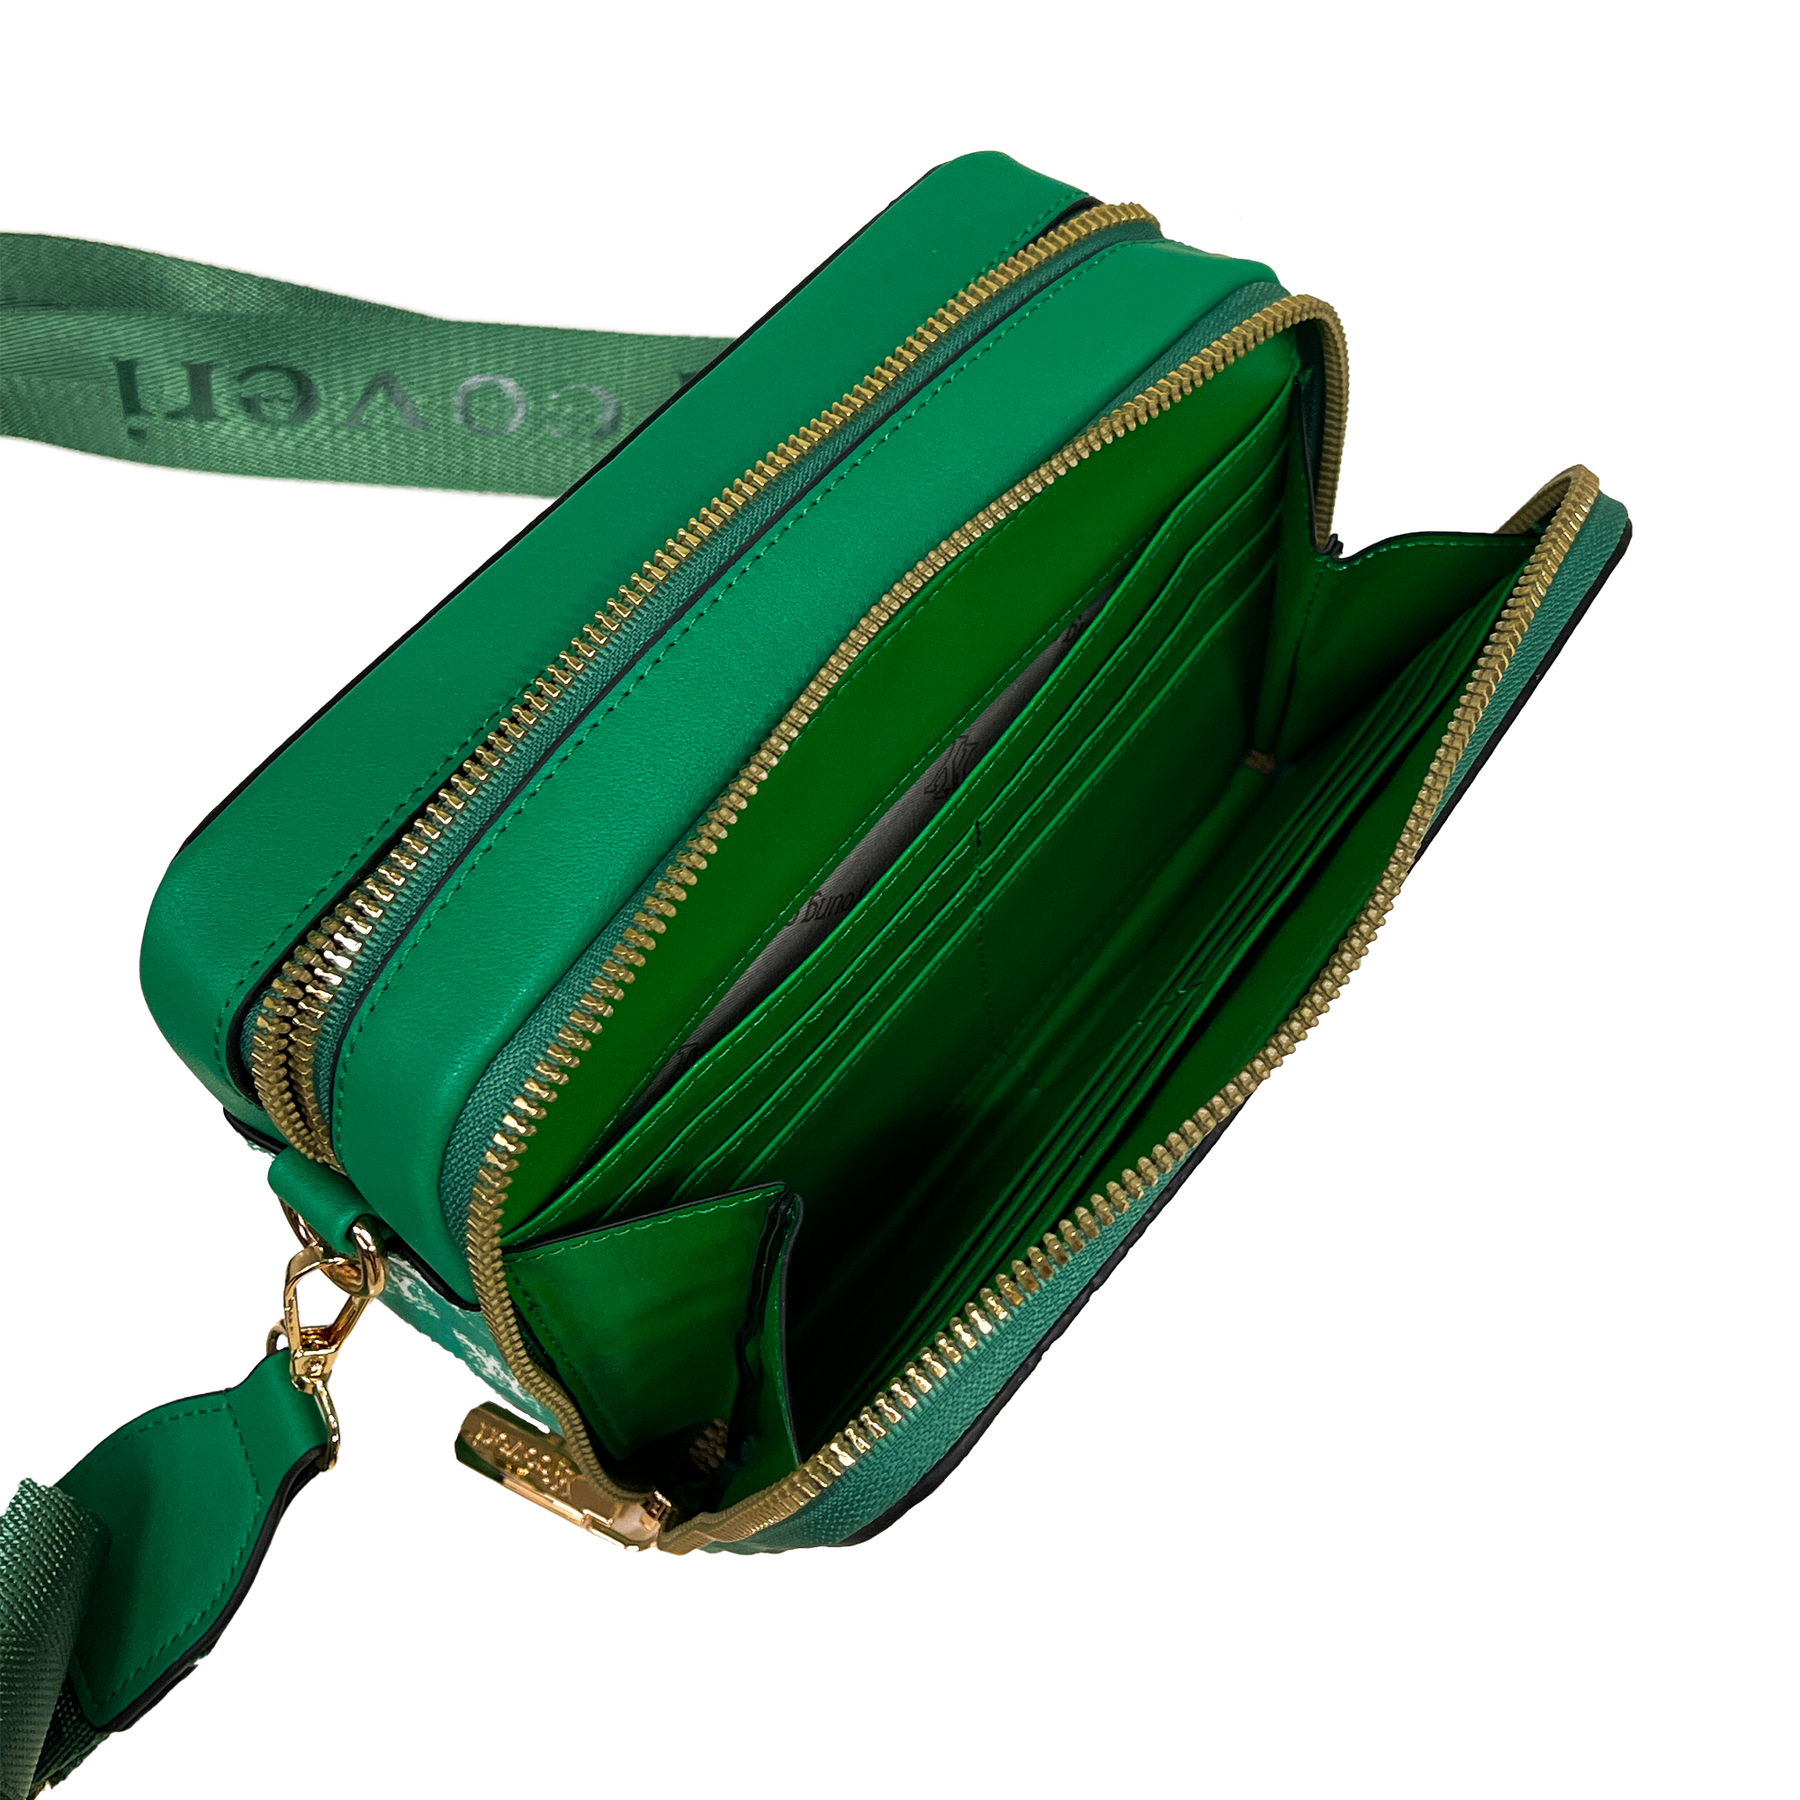 YY Coveri - Designer Shoulder Bag with Iconic Motif - Carry Elegance Everywhere
